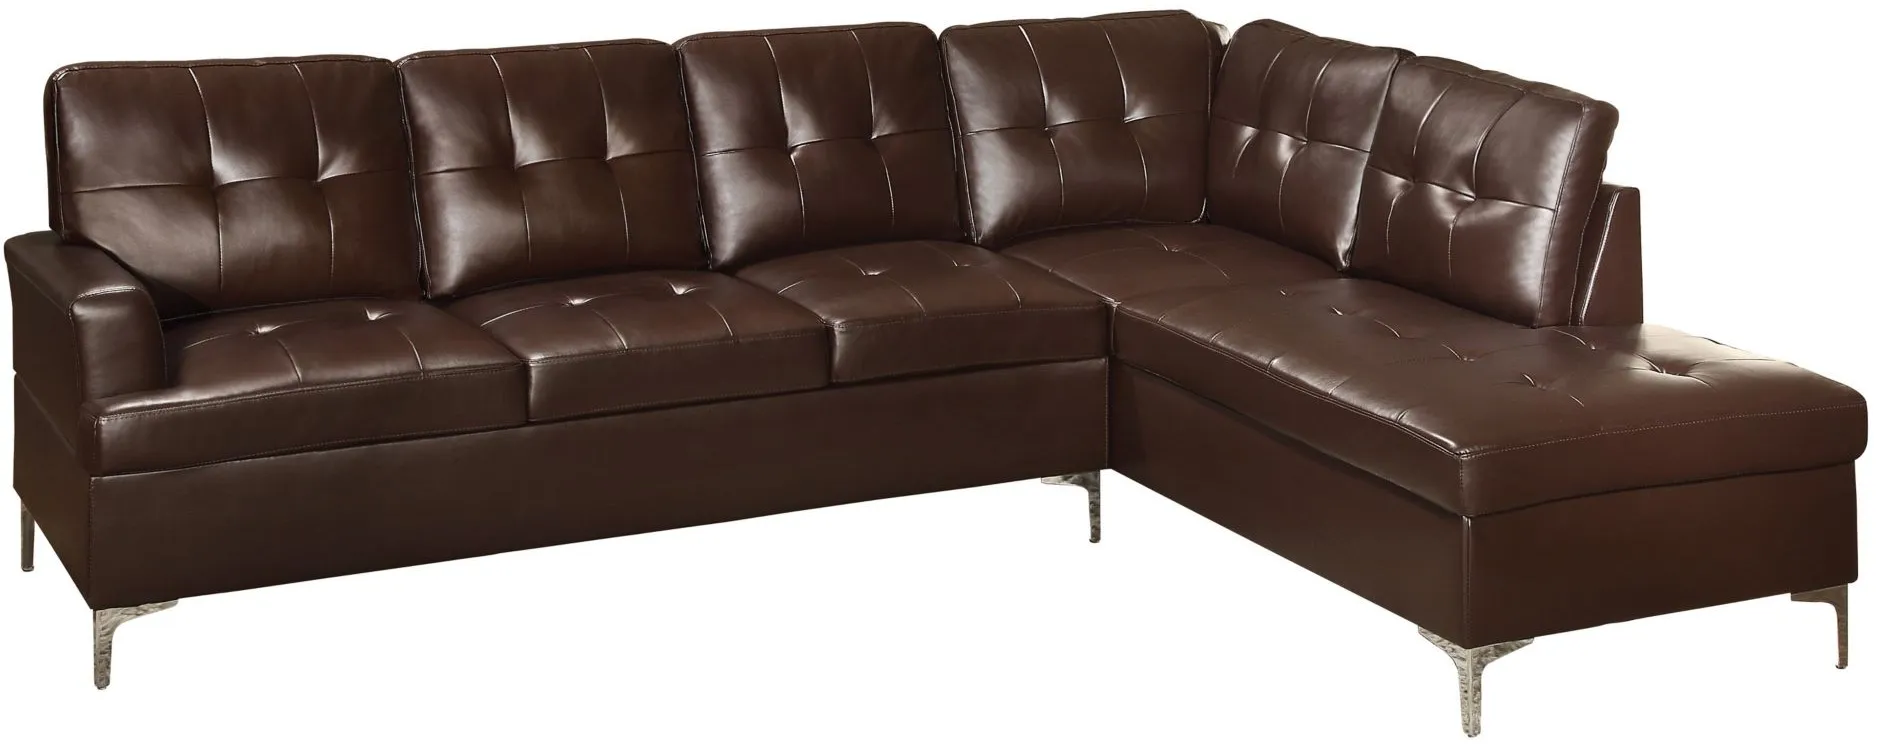 Cruz 2-pc. Sectional Sofa in Brown by Homelegance